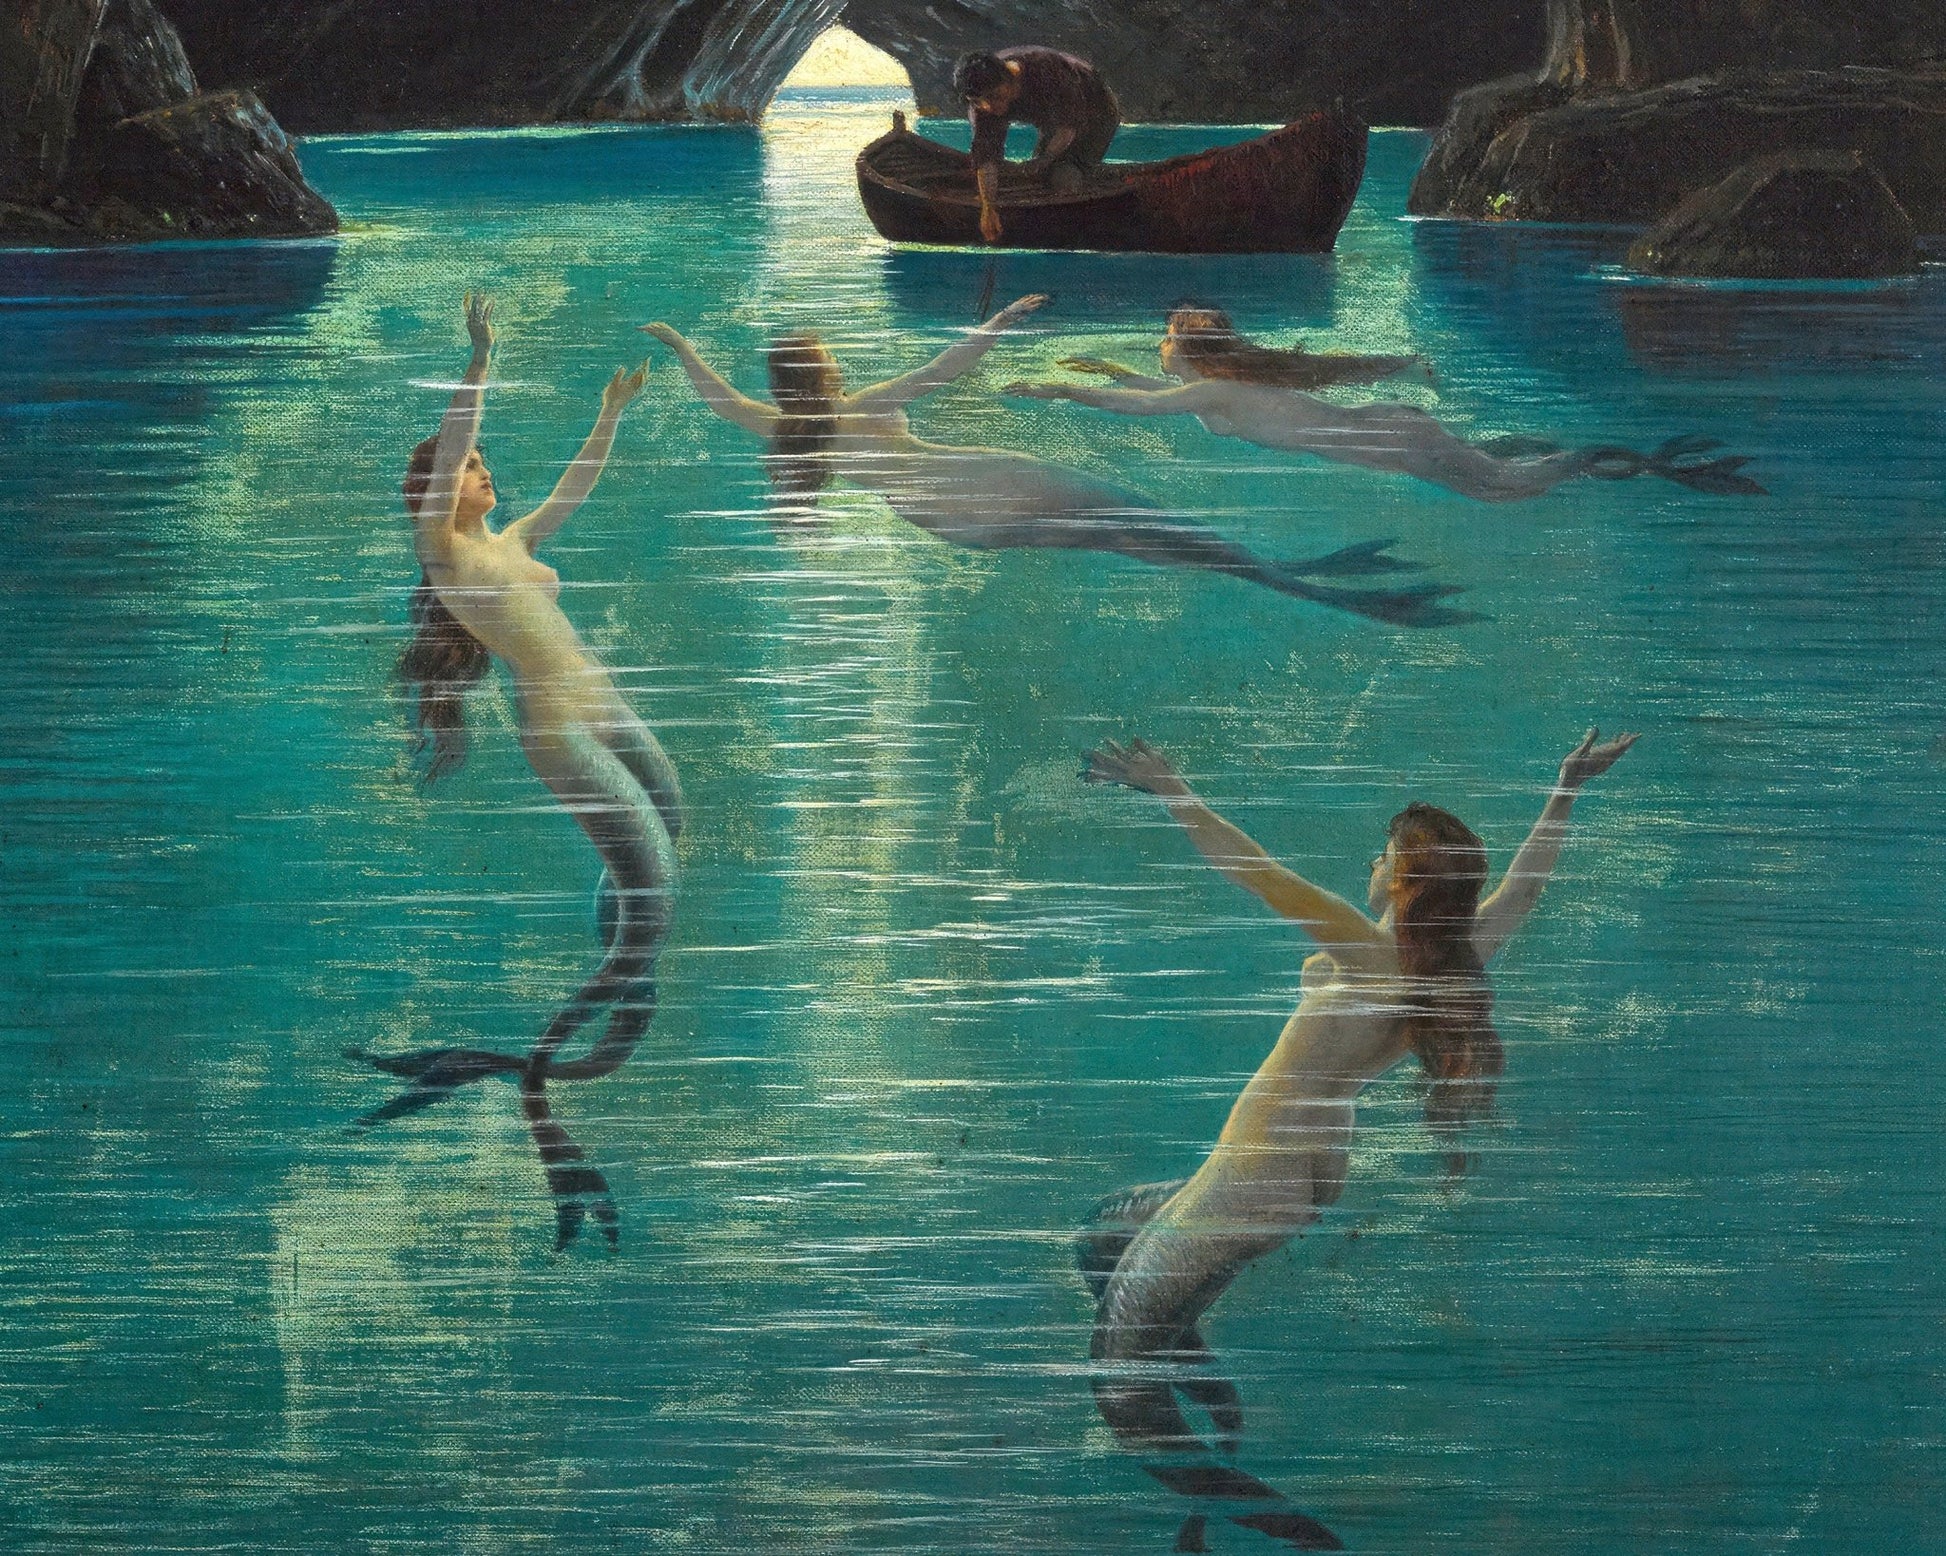 Hermann Corrodi "Fisherman and Mermaids in the Blue Grotto on Capri" (c.1880) - Mabon Gallery